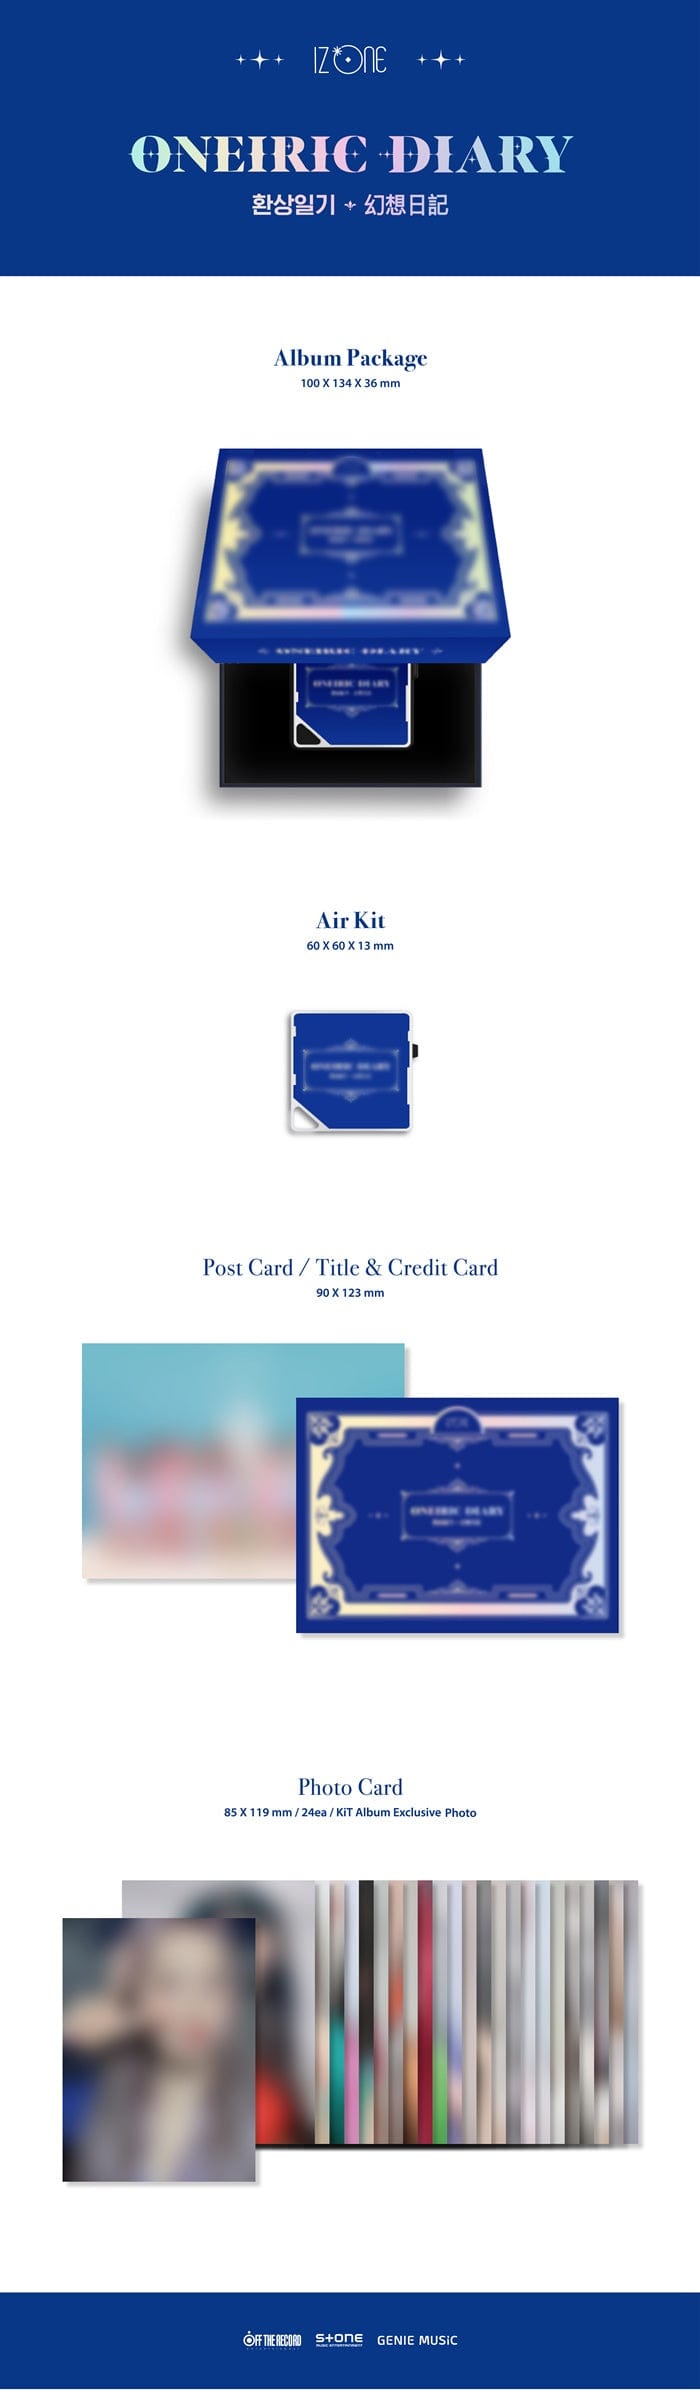 Korea Pop Store IZ*ONE - ONEIRIC DIARY (3RD MINI ALBUM) KIT ALBUM Kawaii Gifts